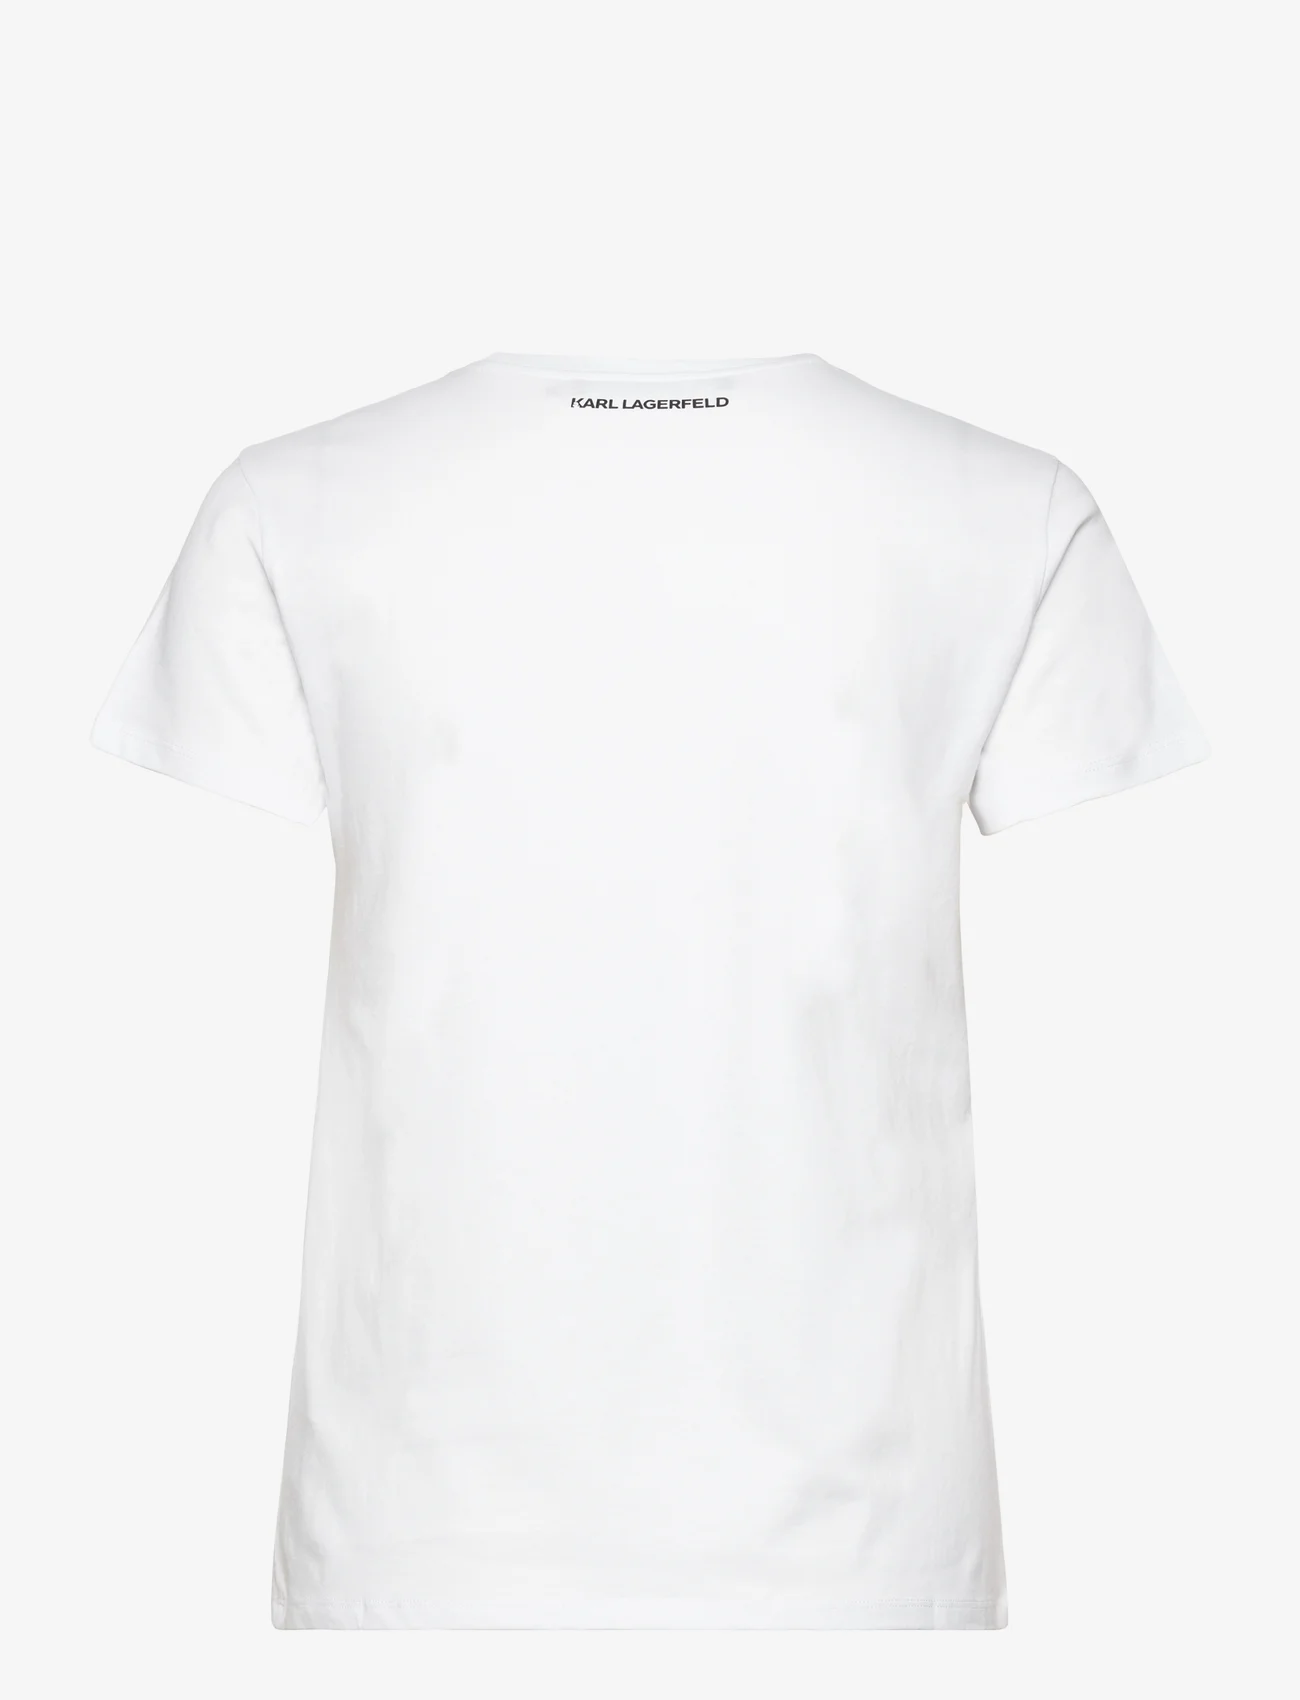 Karl Lagerfeld - boucle choupette t-shirt - white - 1